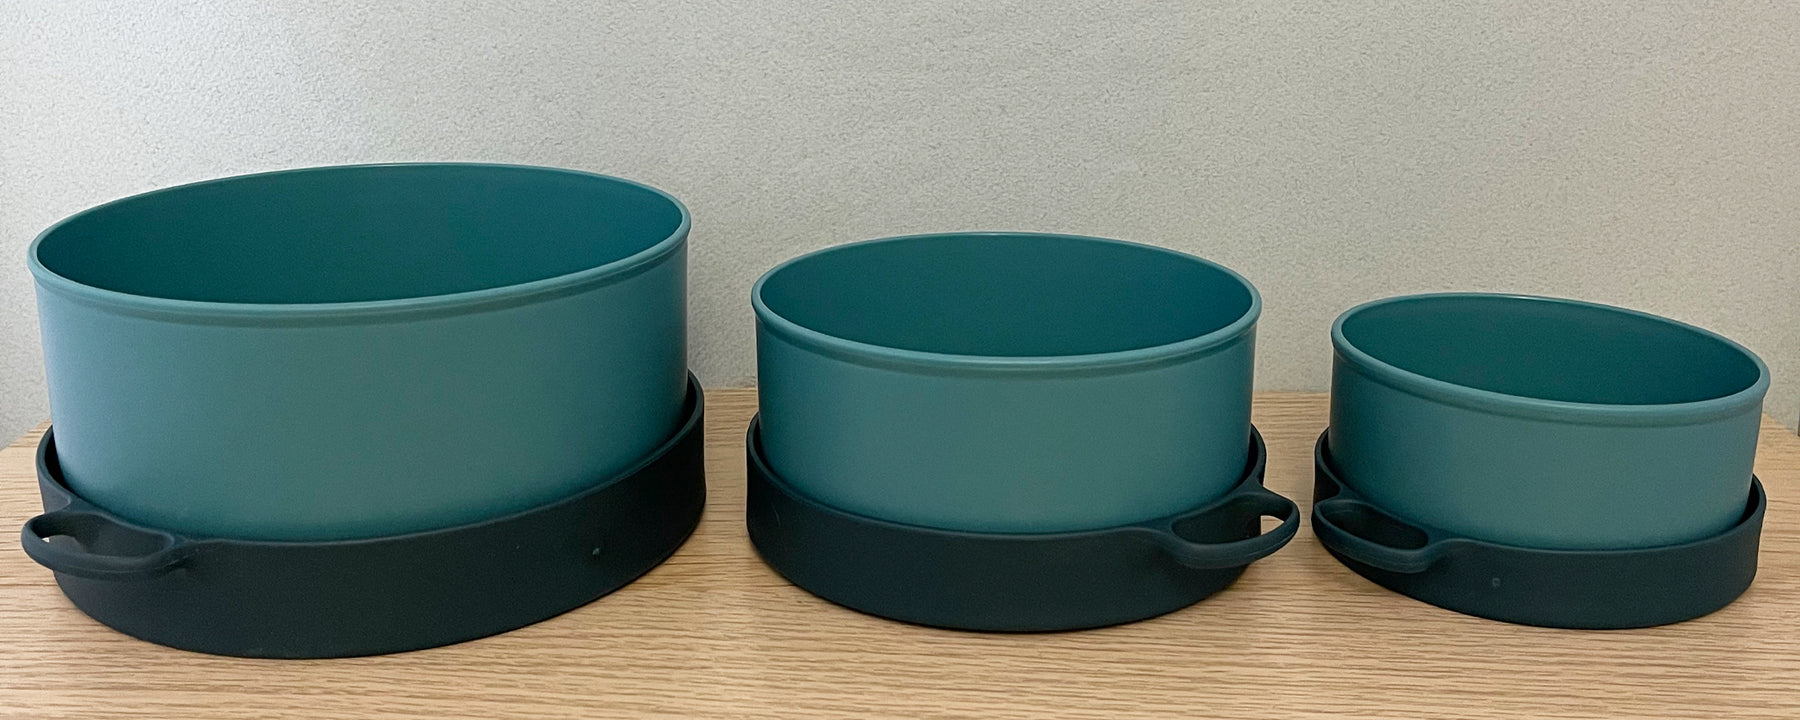 hip set of three bowls